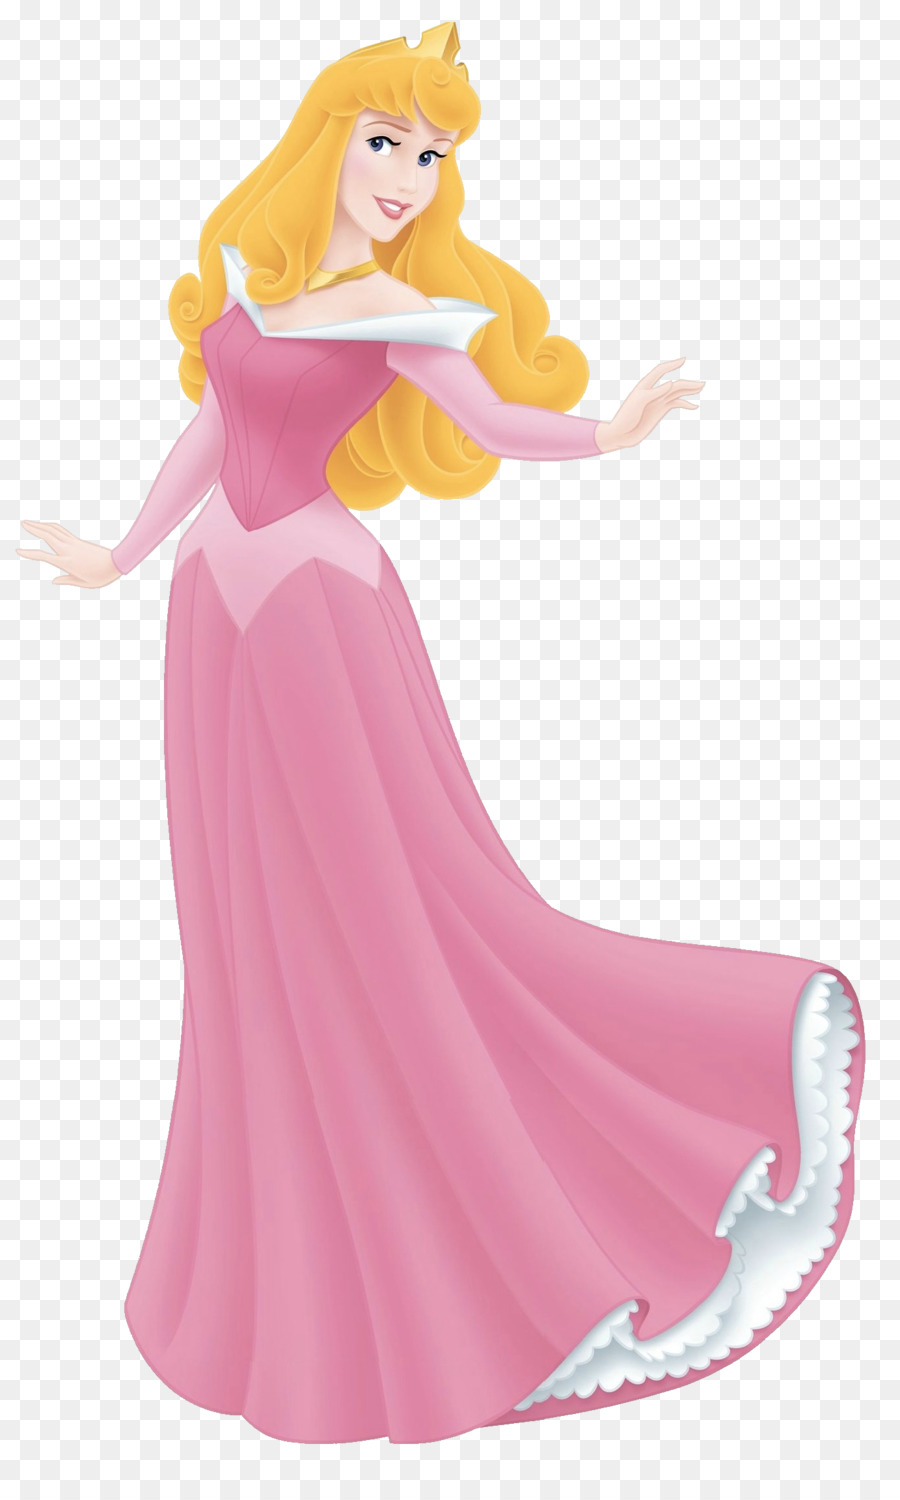 Princess Aurora Princess Jasmine Rapunzel Ariel Belle - sleeping beauty png download - 1383*2299 - Free Transparent Princess Aurora png Download.